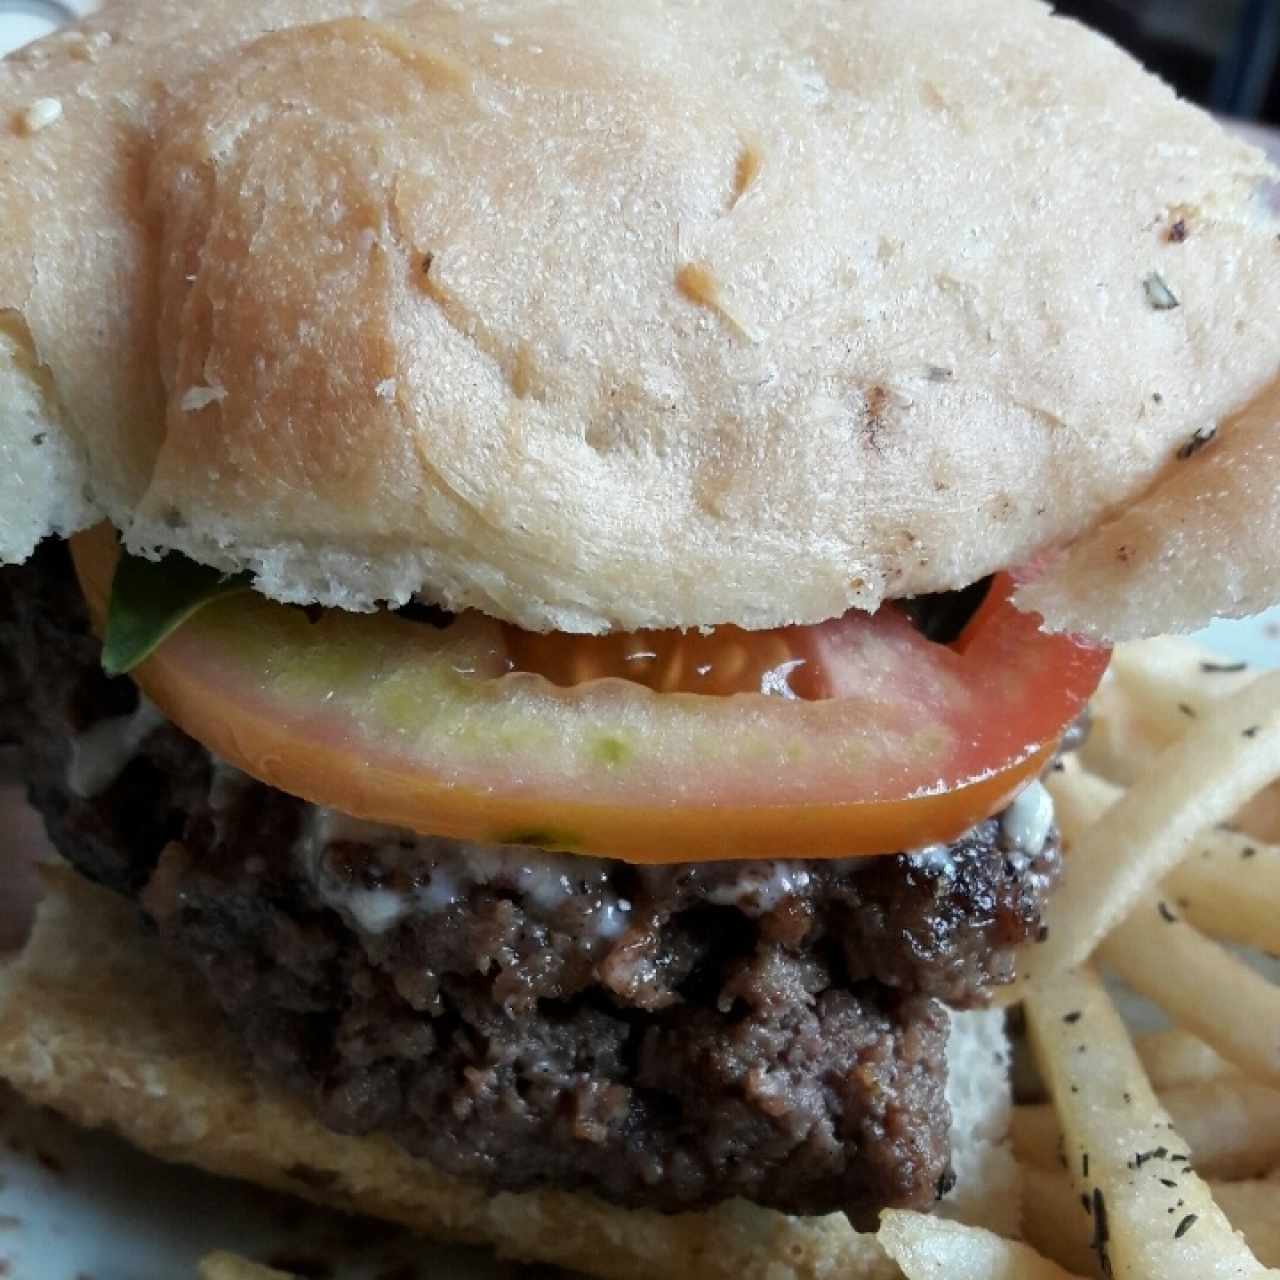 Romero burger